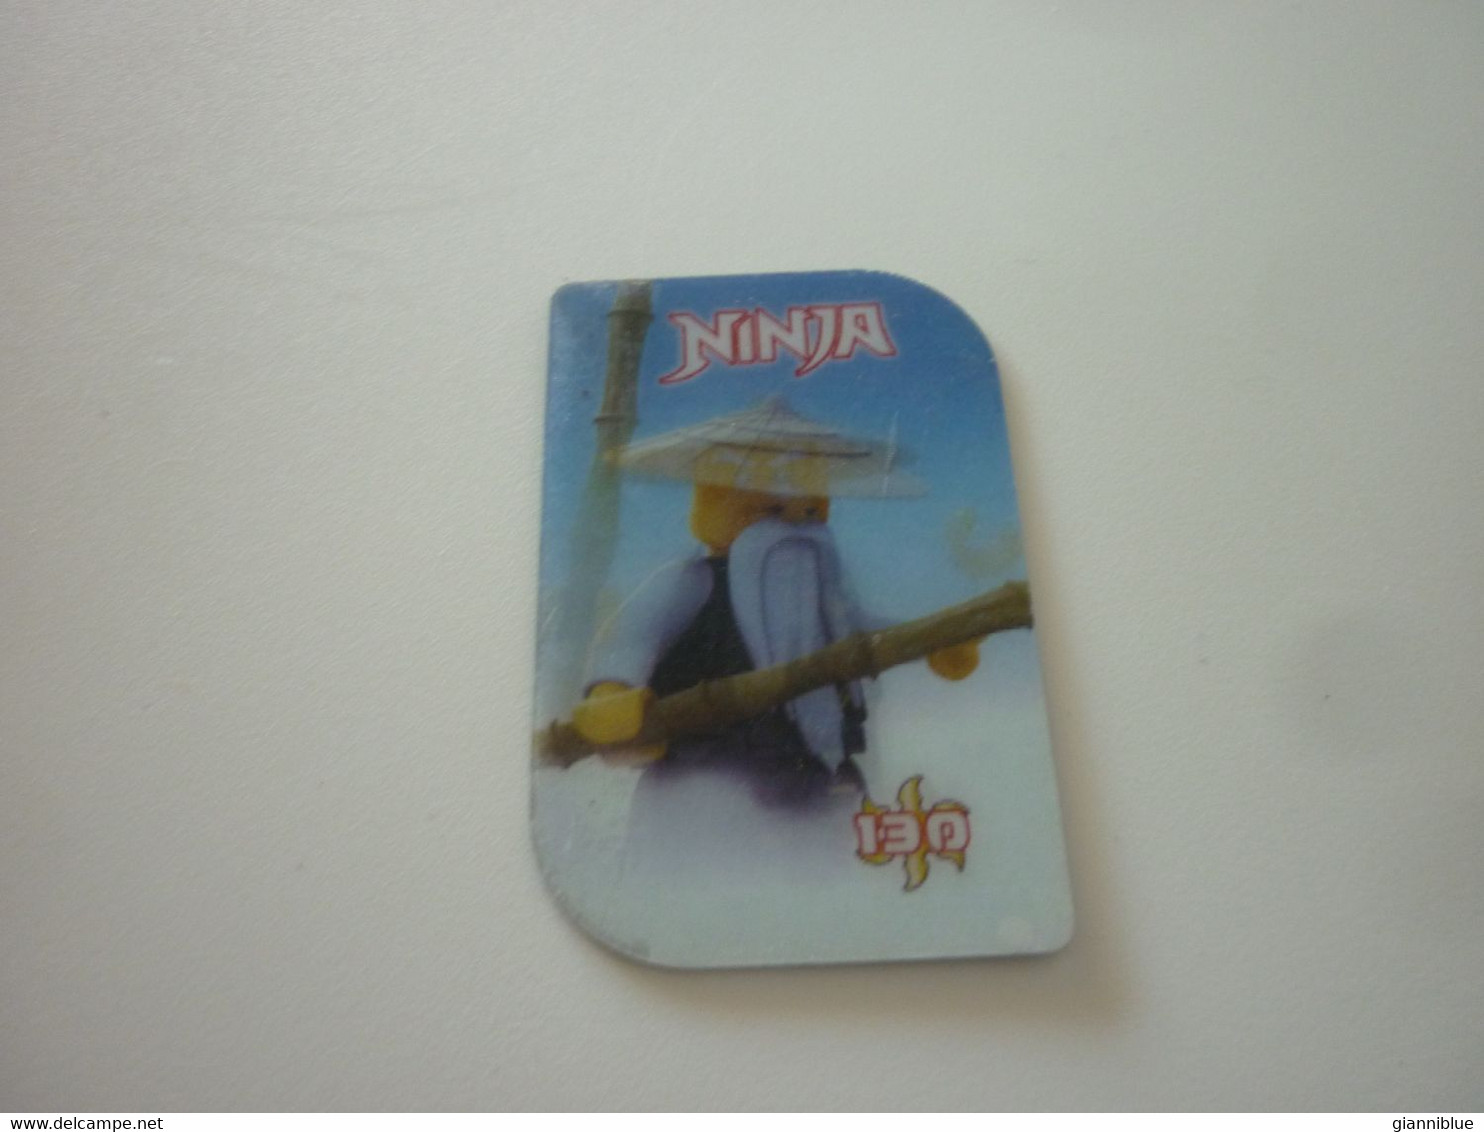 Lego Ninja 3D Greek Edition Metal Card Tag #130 - Unclassified